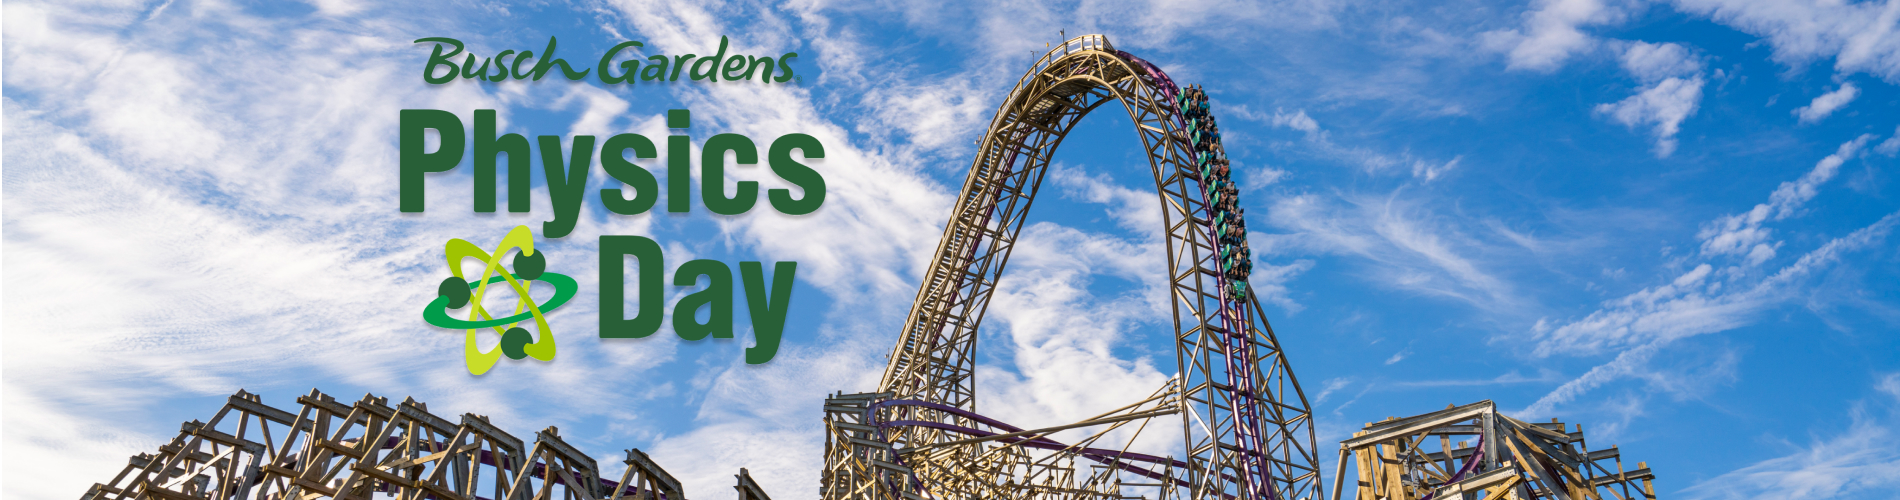 Physics Day at Busch Gardens Tampa Bay.